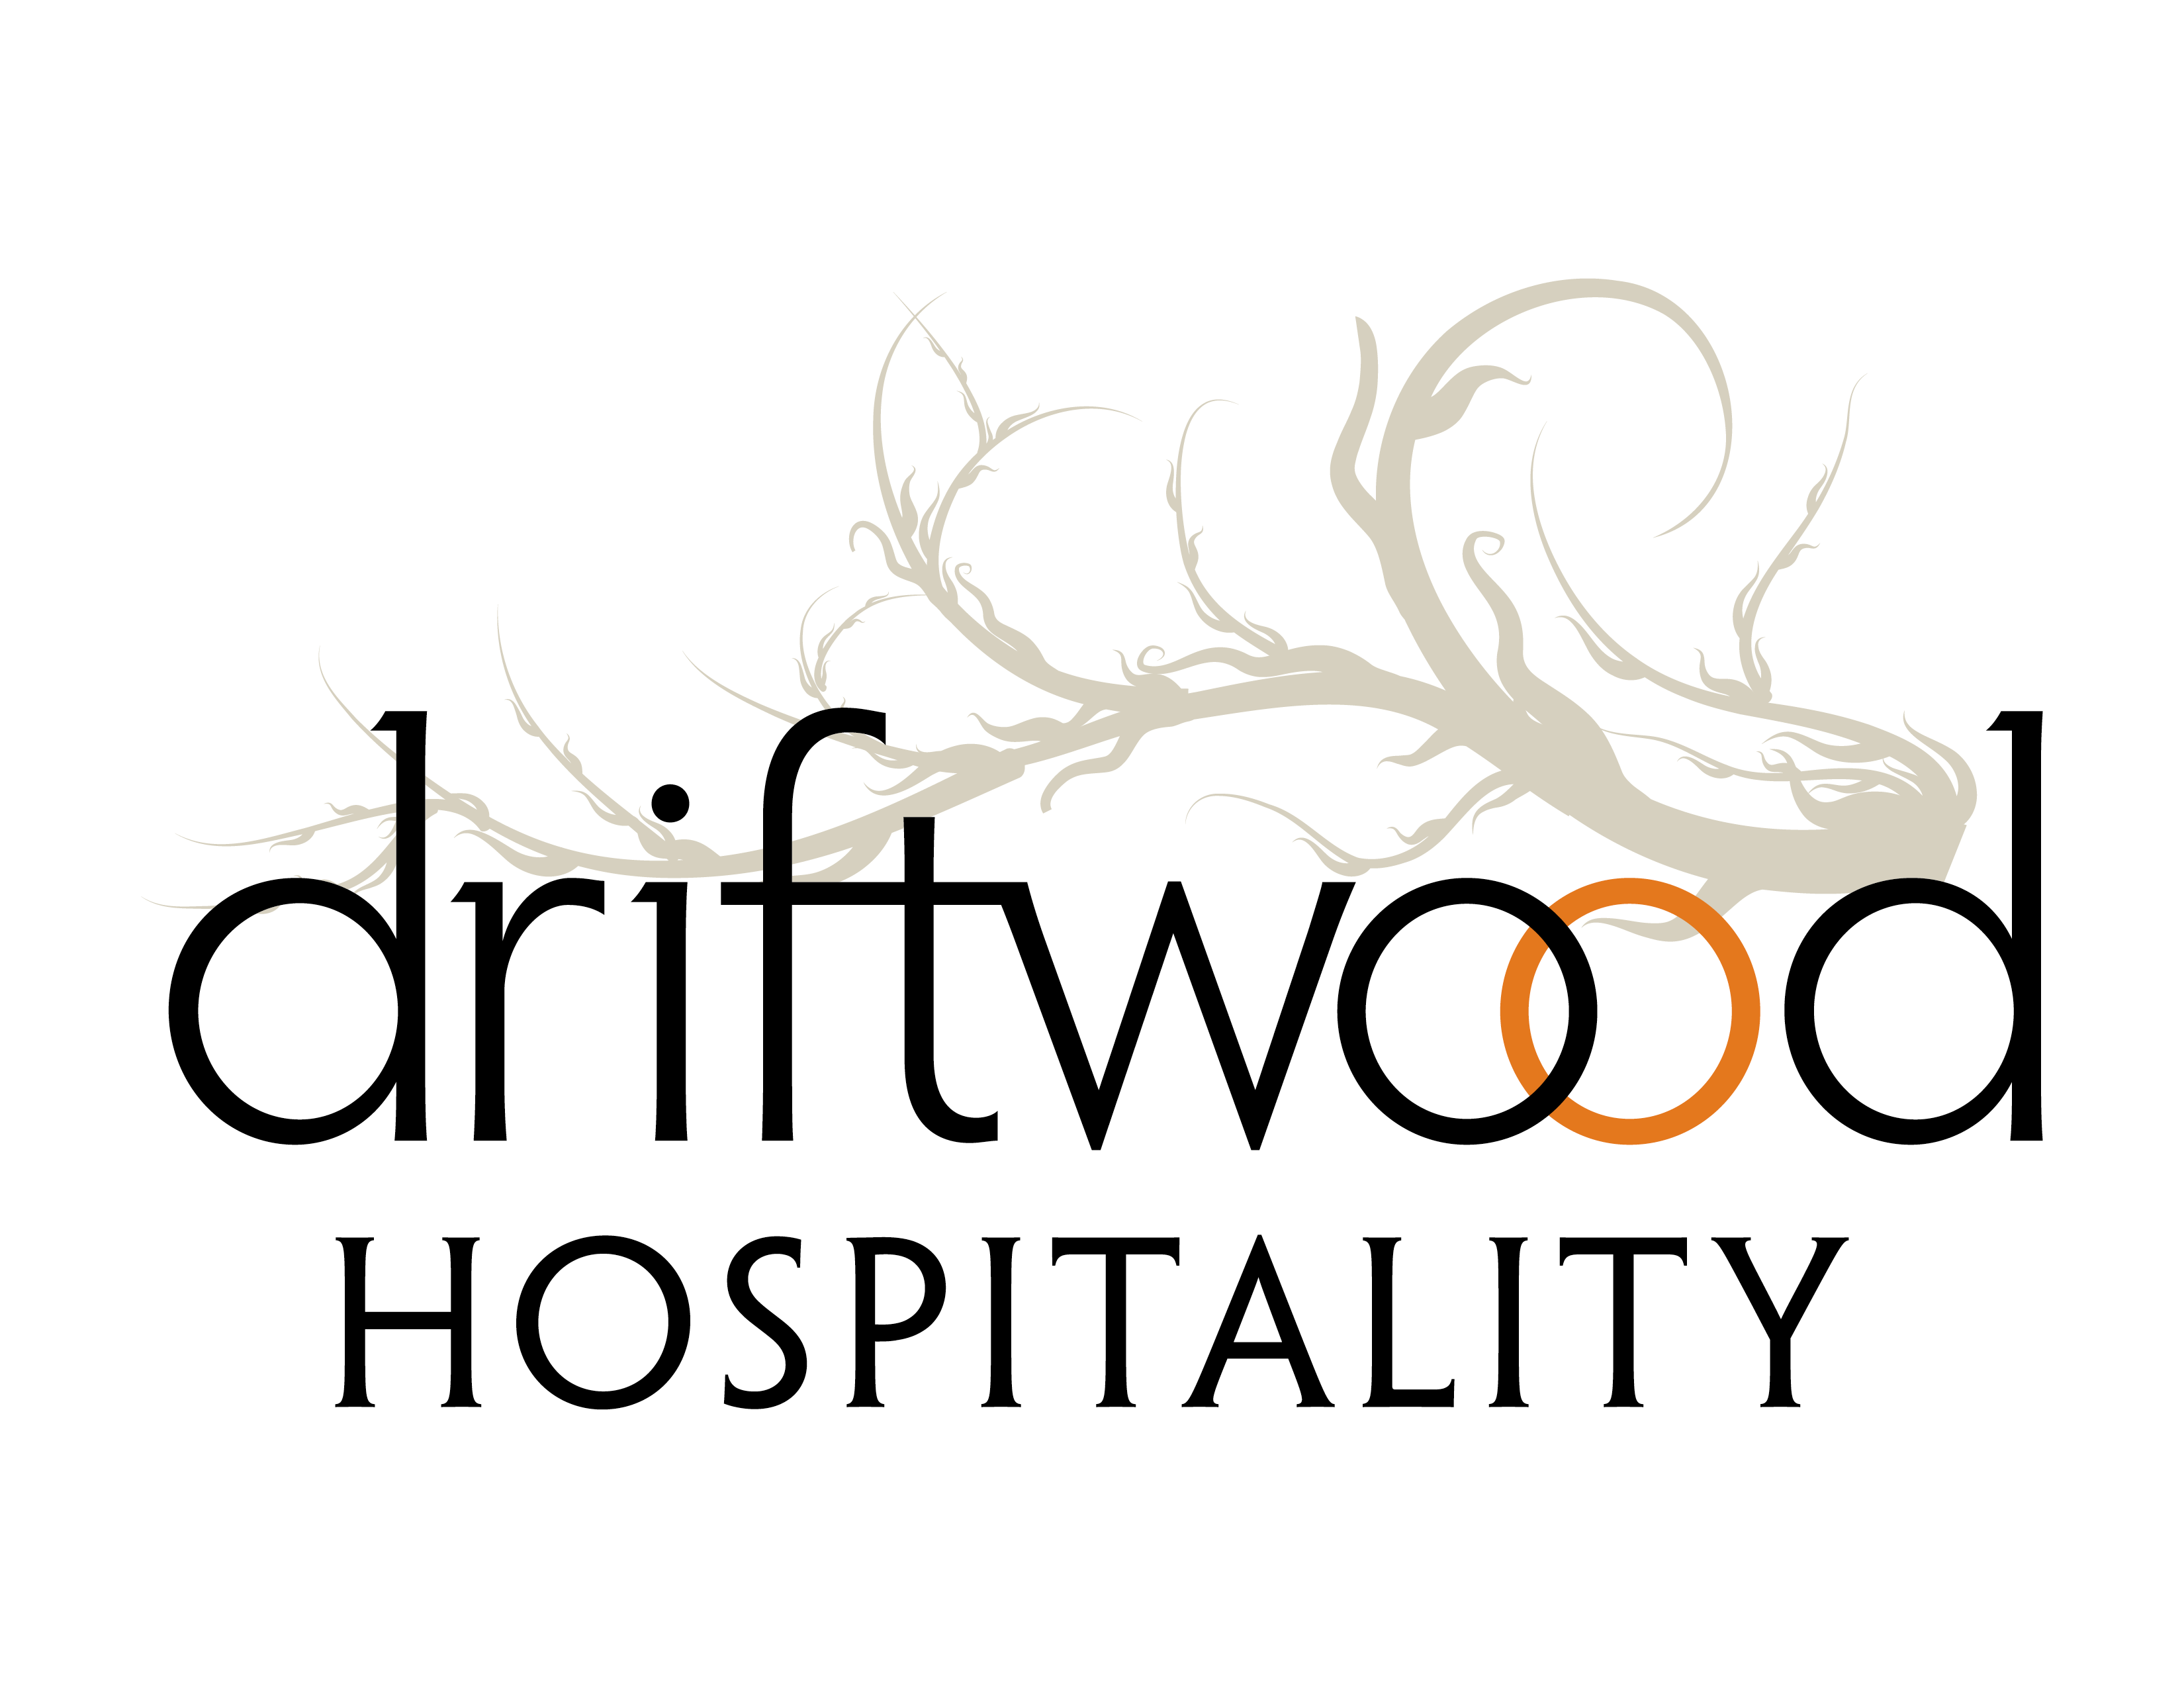 driftwood logo